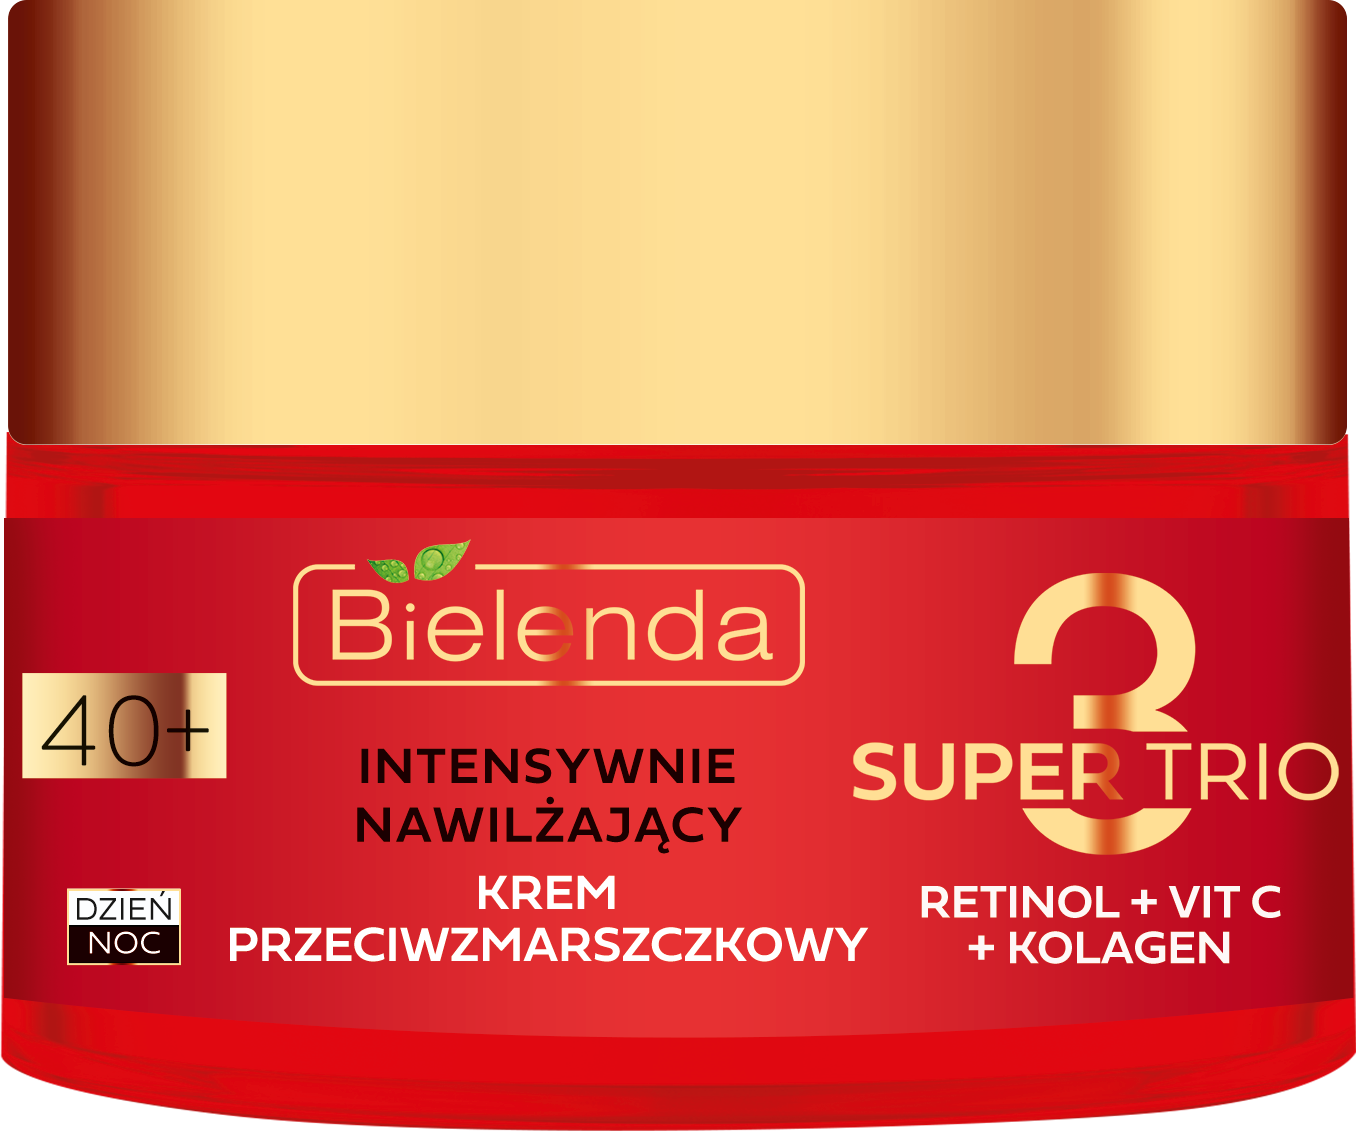 Bielenda Super Trio (Retinol + Vit C + Kolagen) 40+ крем для лица, 50 ml